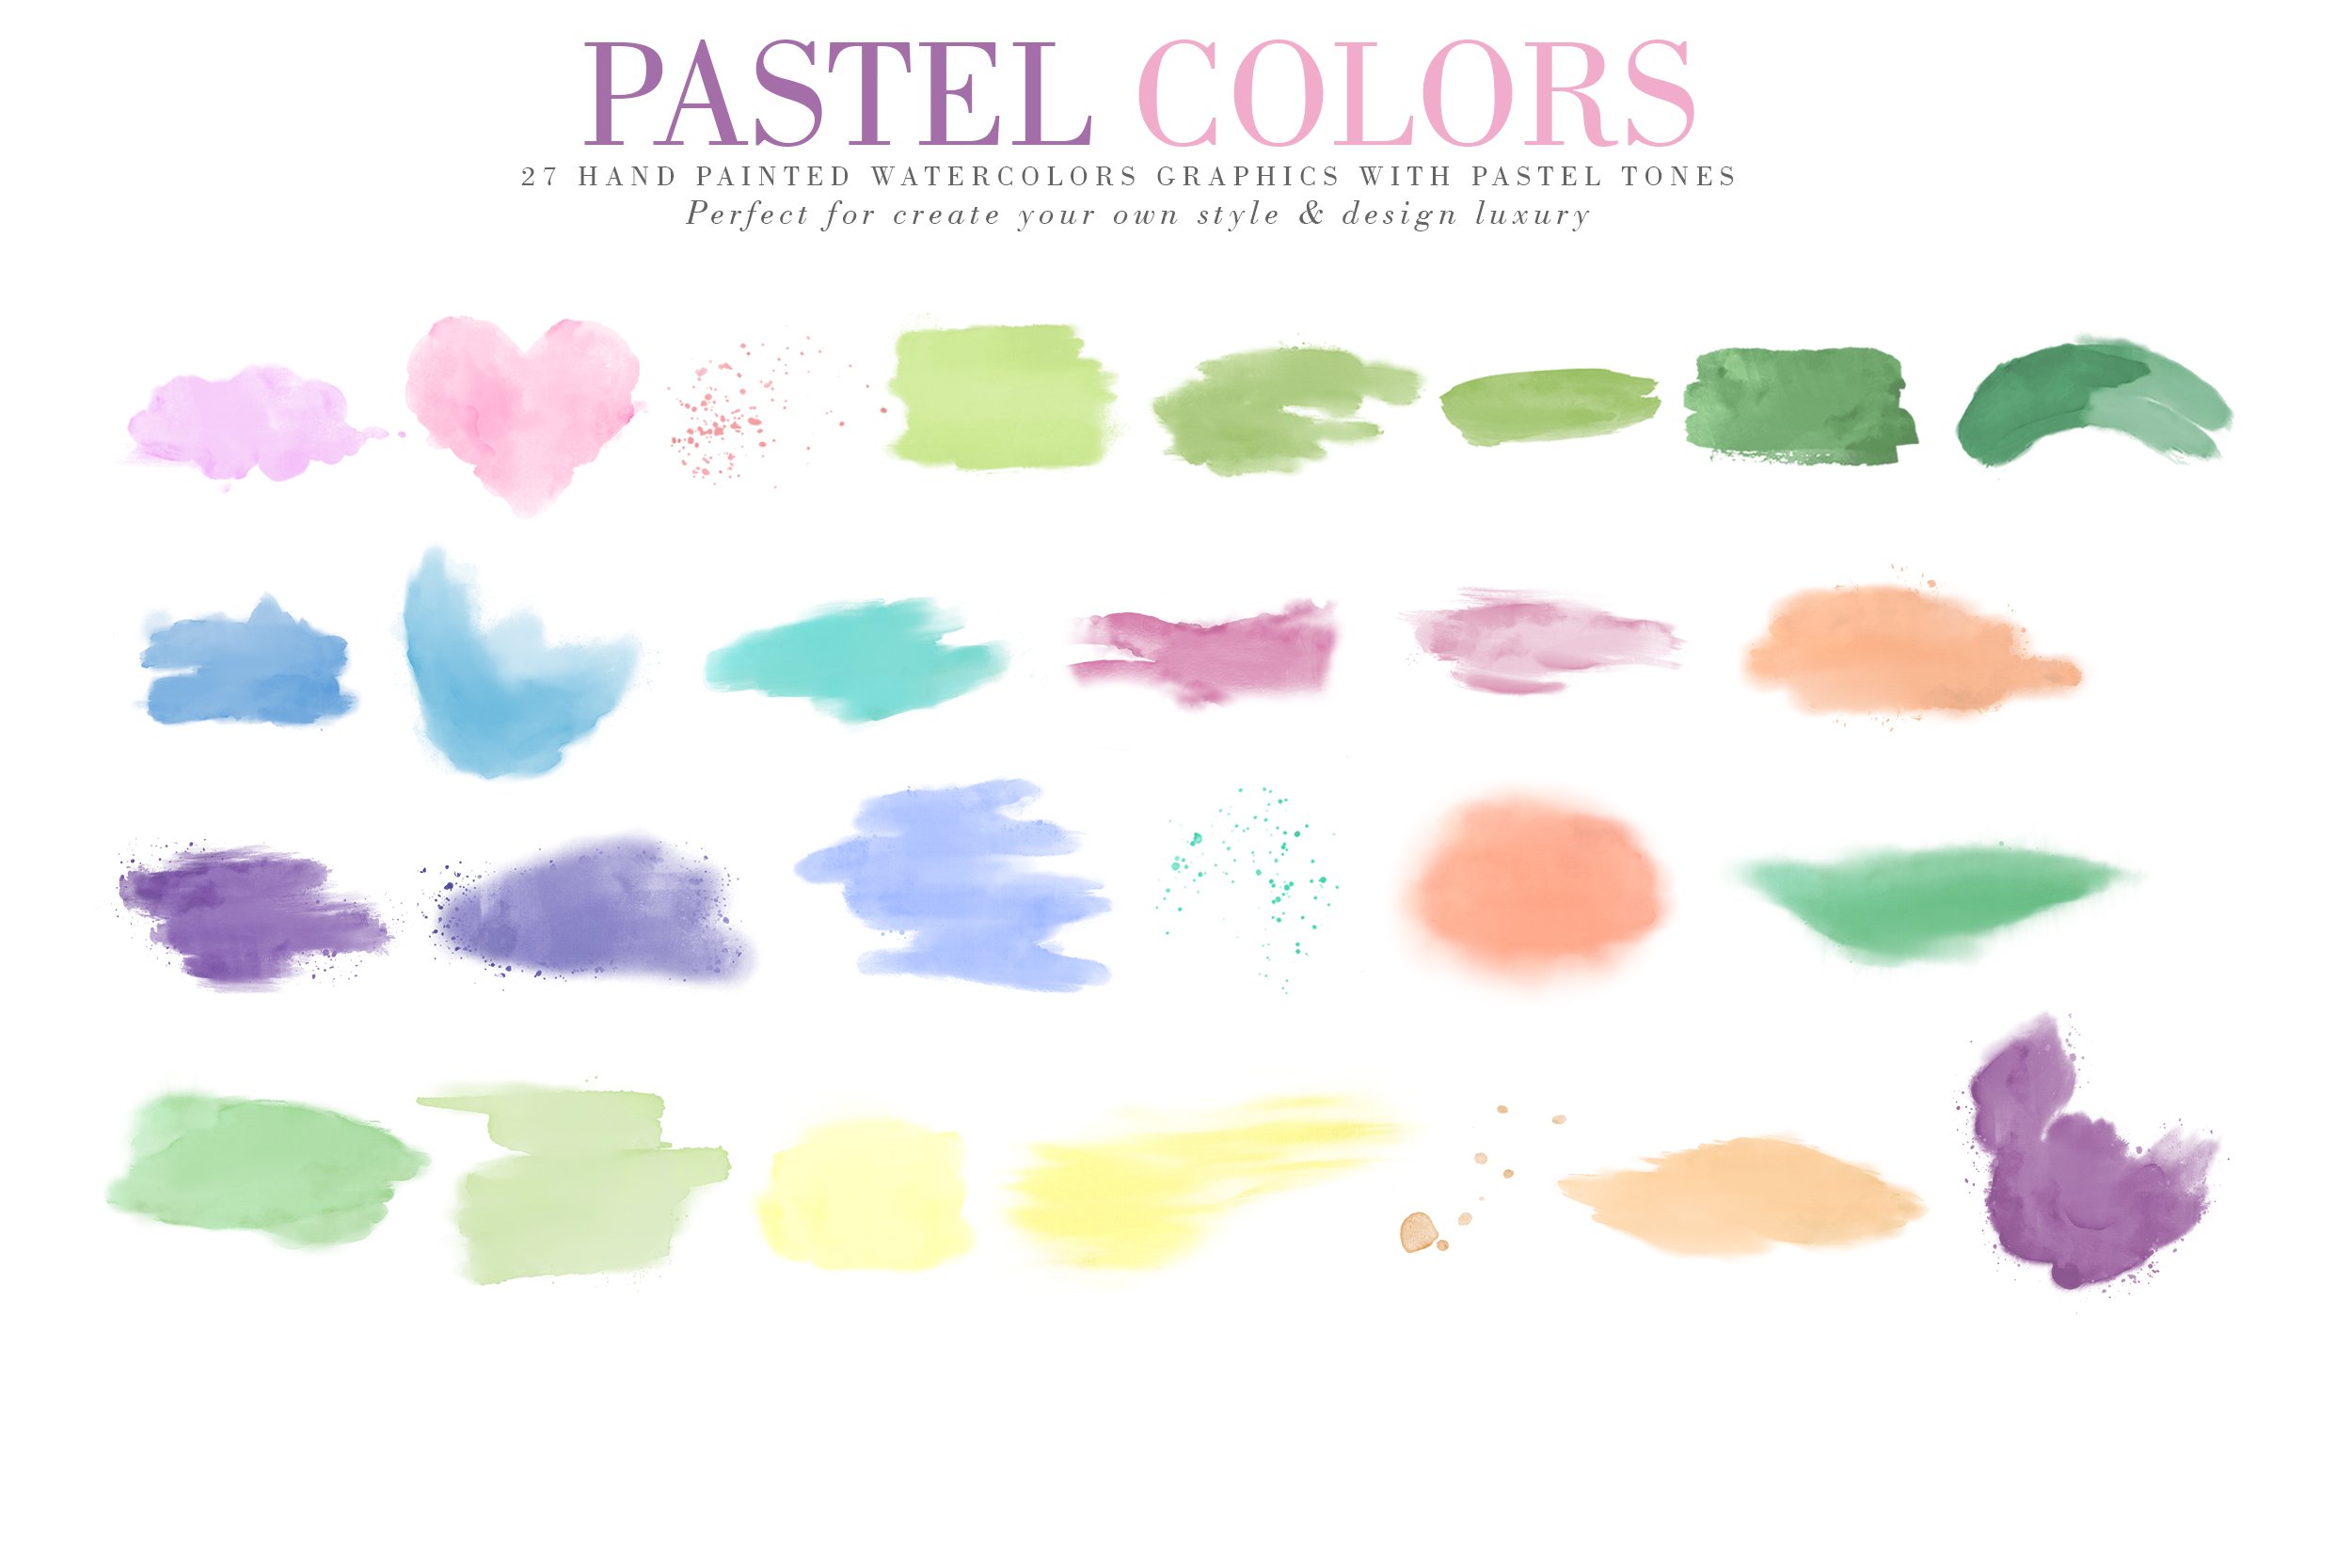 Pastel Colors | Watercolor textures preview image.